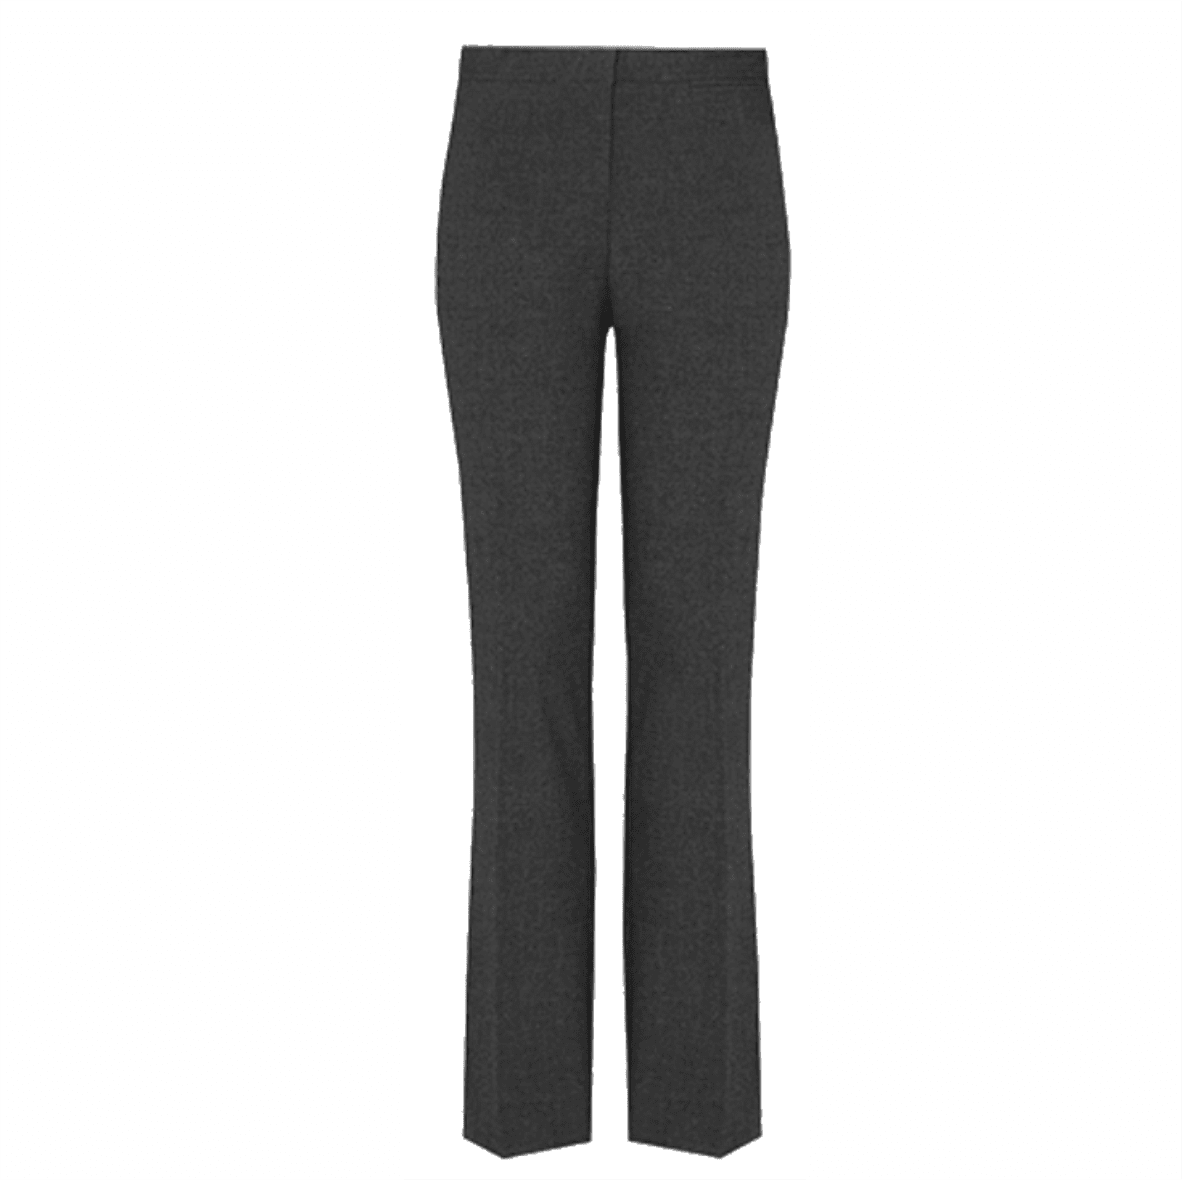 David Luke Girls Black Slim Fit Trousers - Schoolwear Solutions